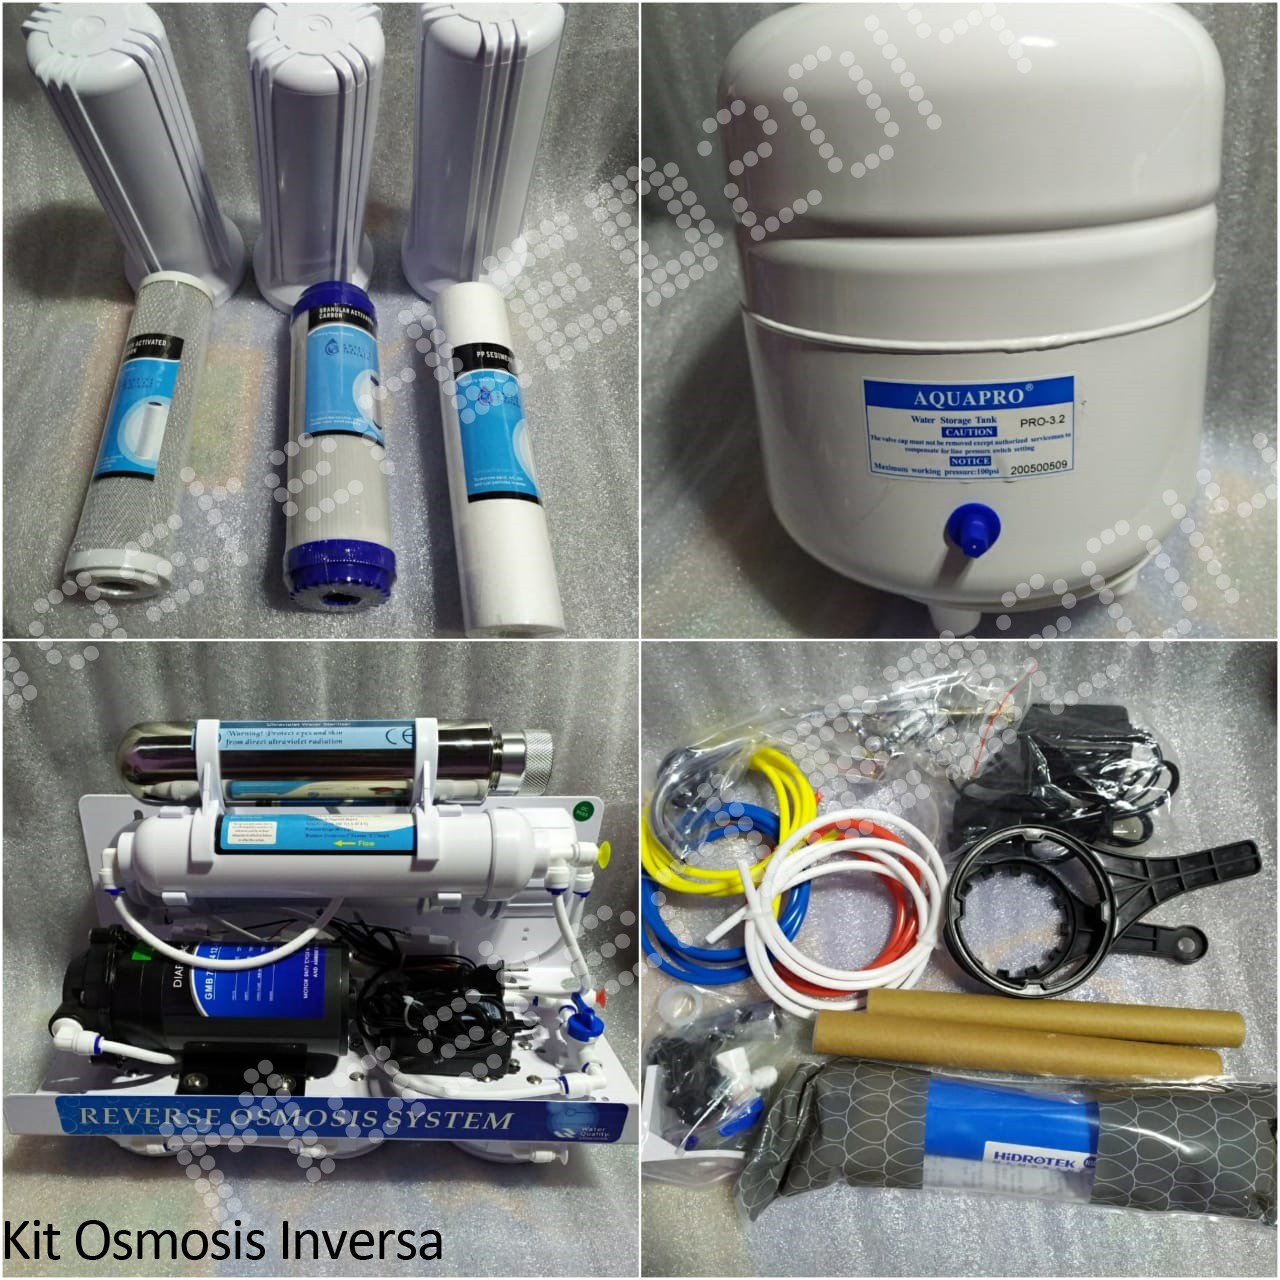 Filtro Osmosis Inversa 6 Etapas 75gpd Lampara Uv + Equipo